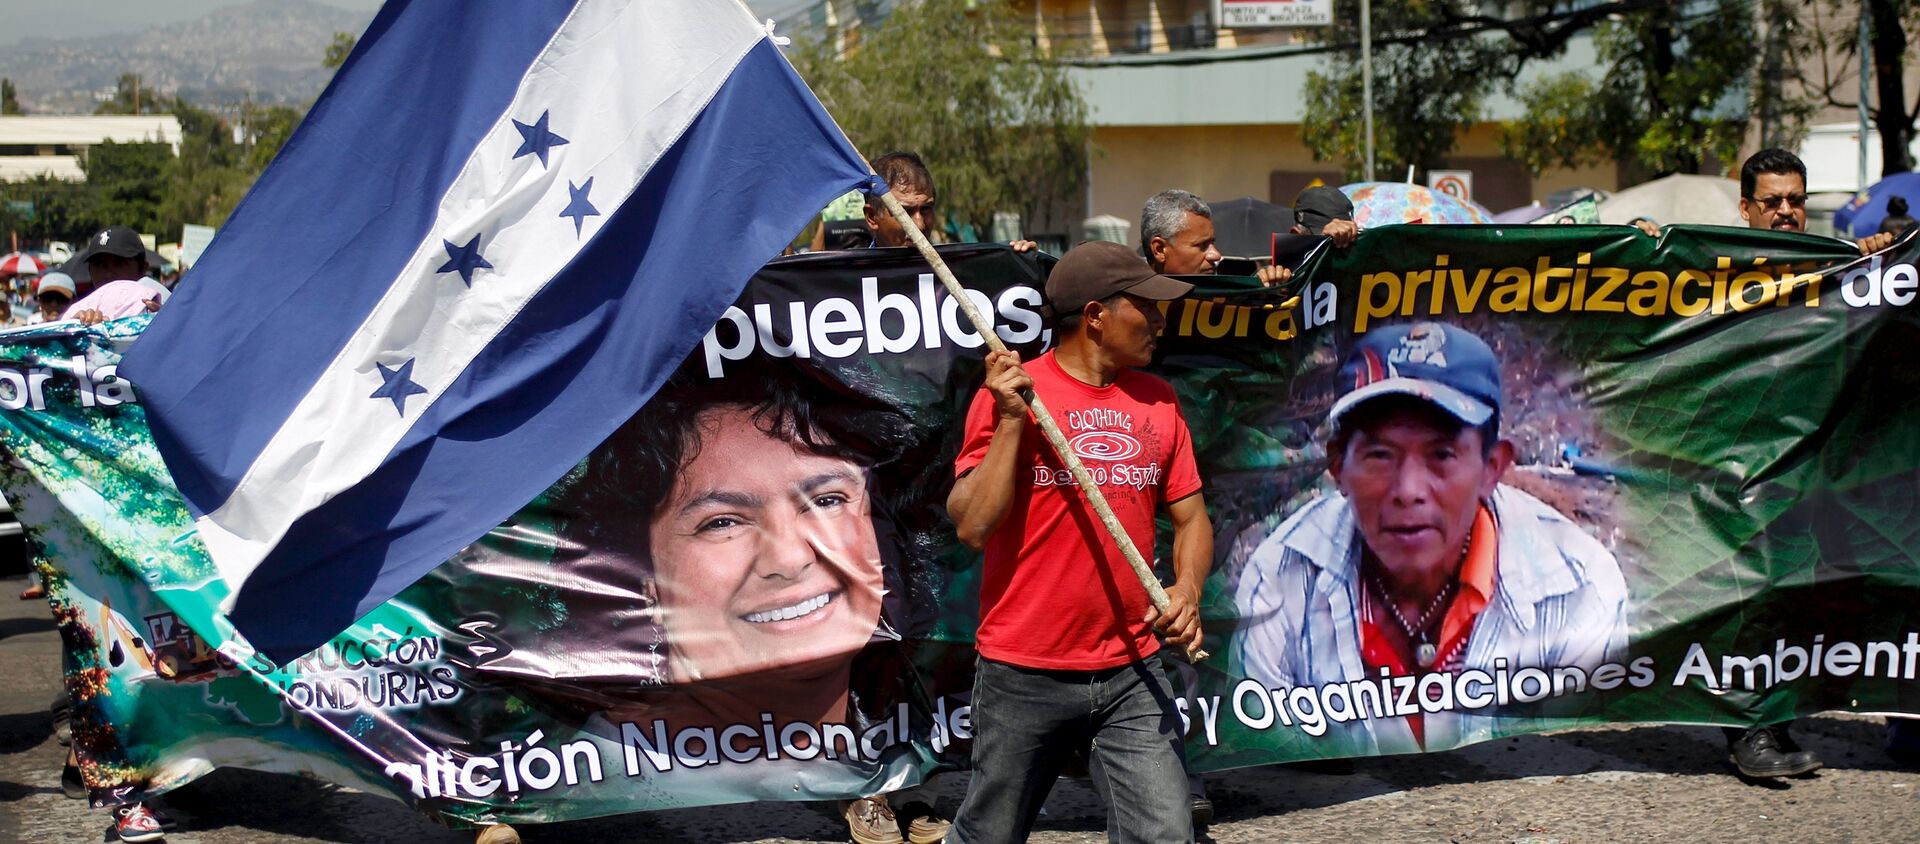 Protesta en Honduras reclamando justicia para Berta Cáceres - Sputnik Mundo, 1920, 03.12.2019